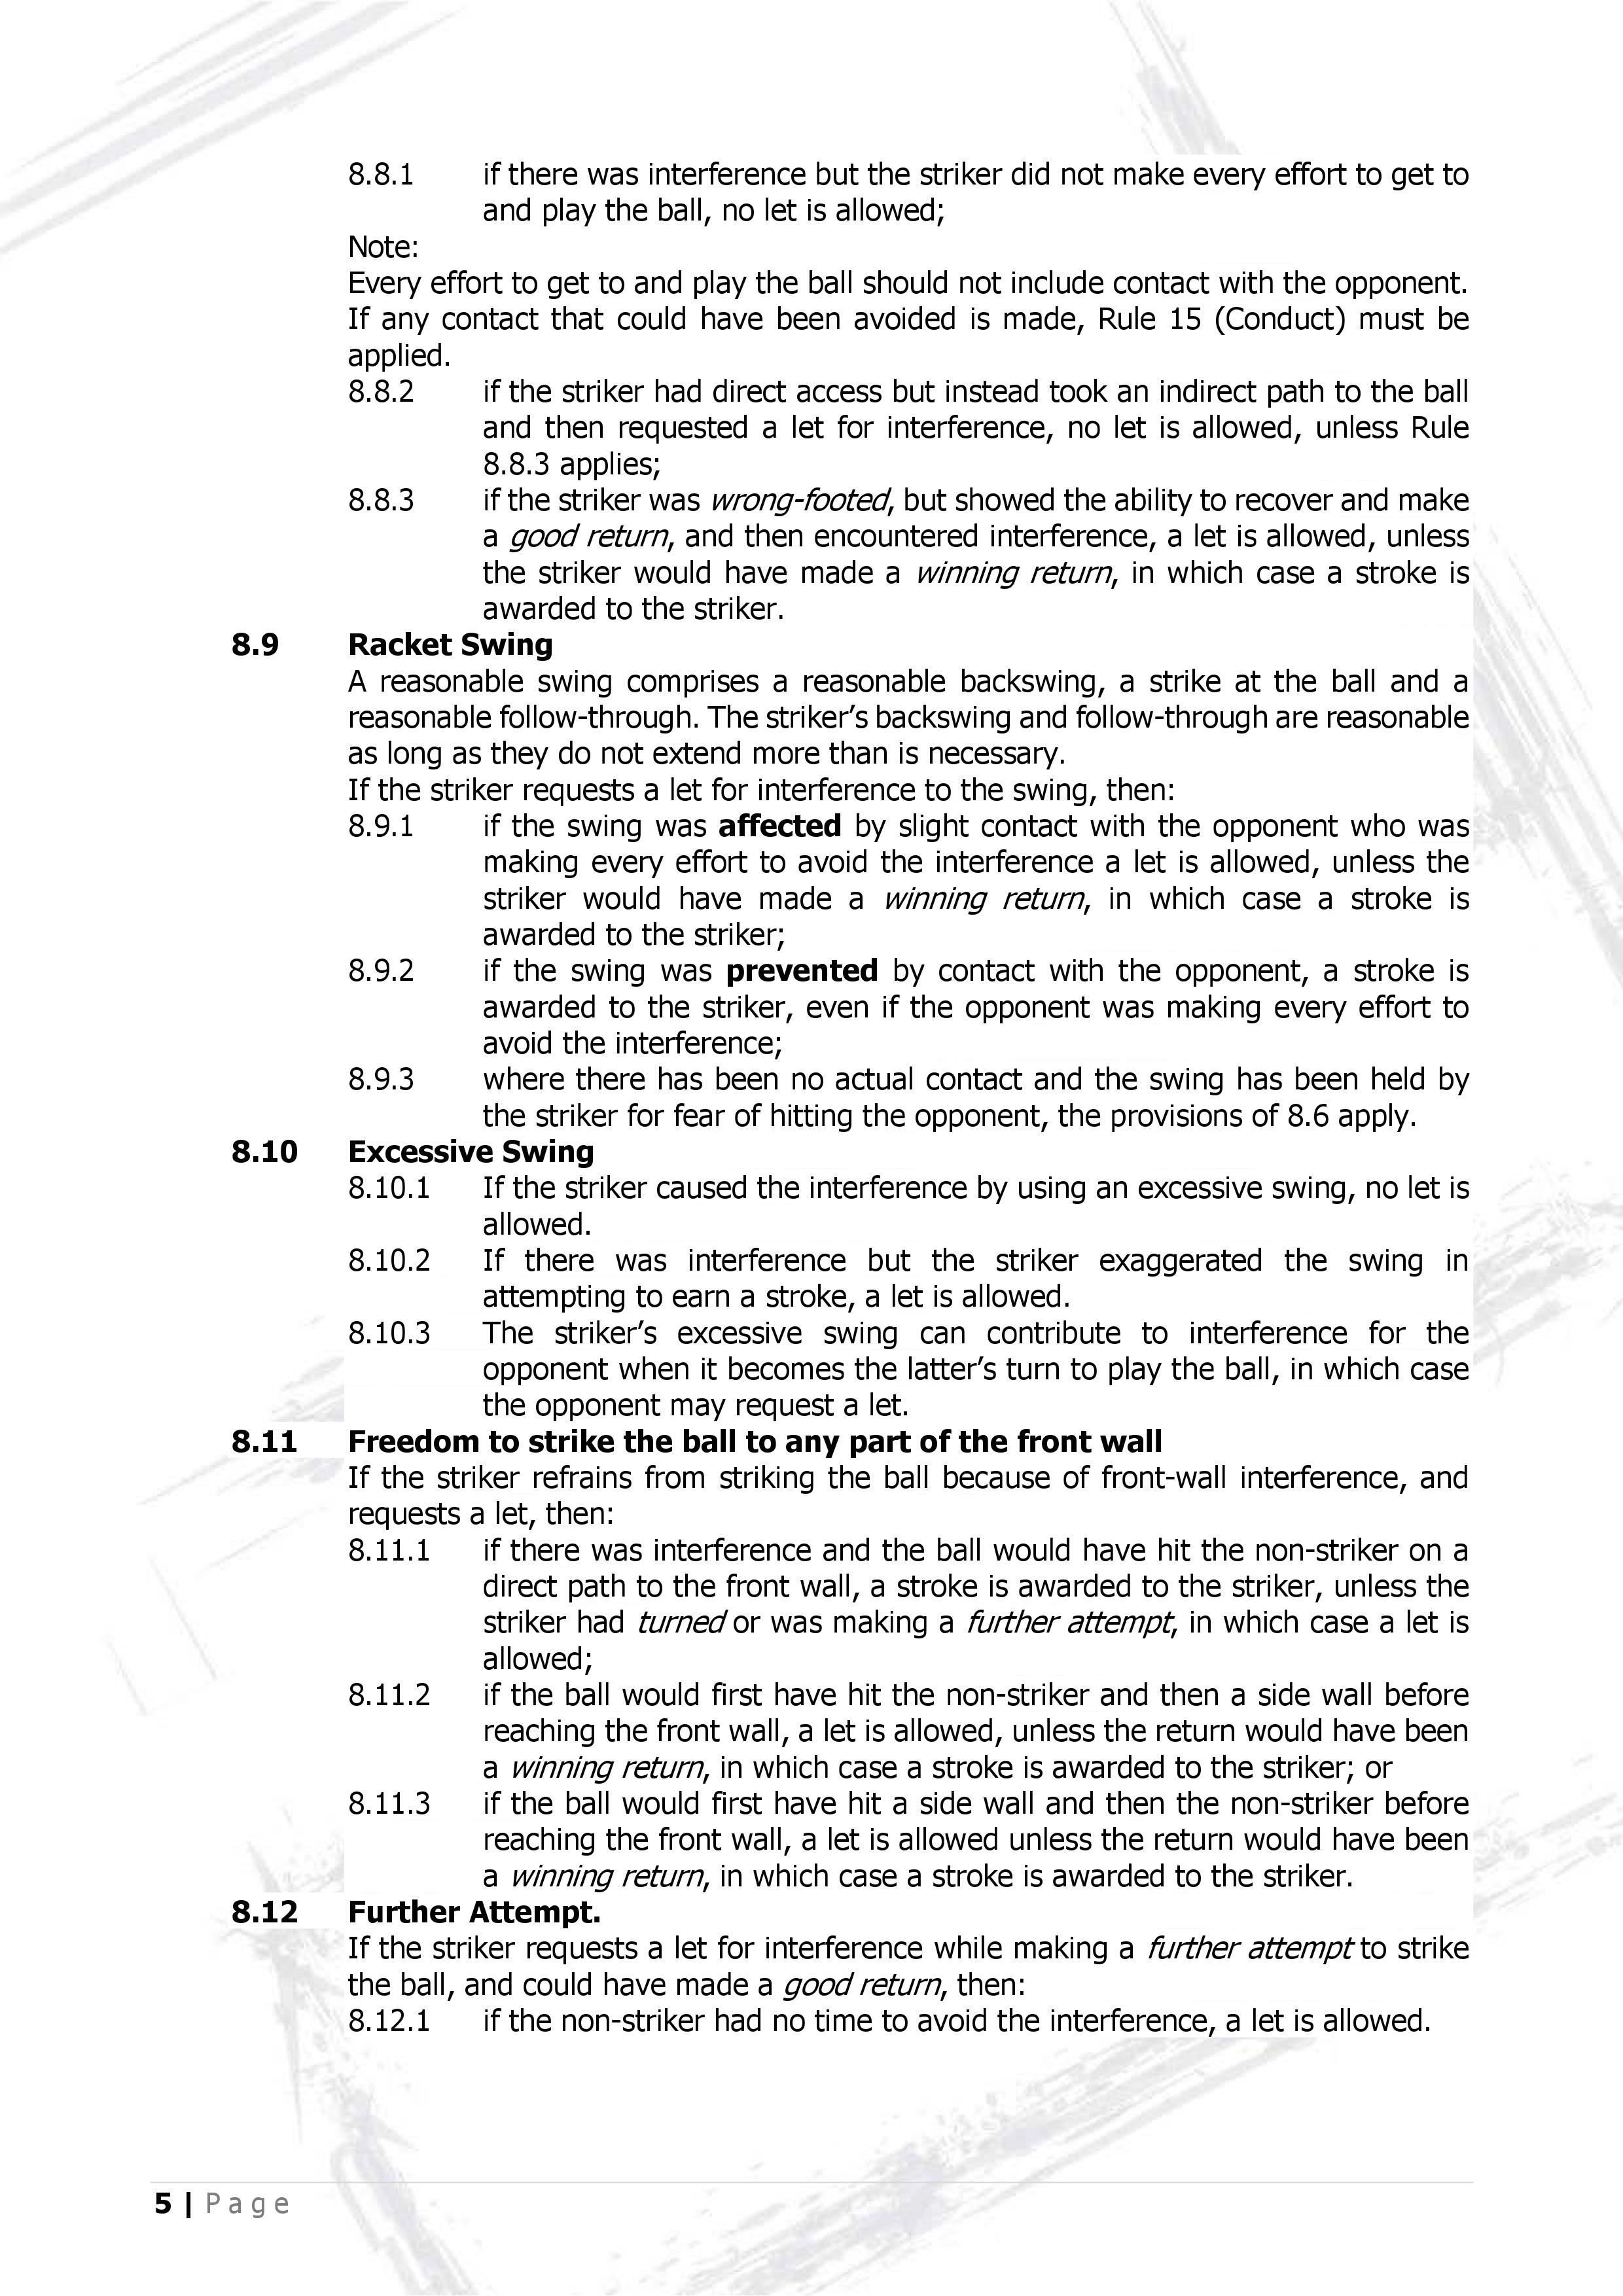 World Squash Federation Rules - Global Squash Coach - Page 7.jpg